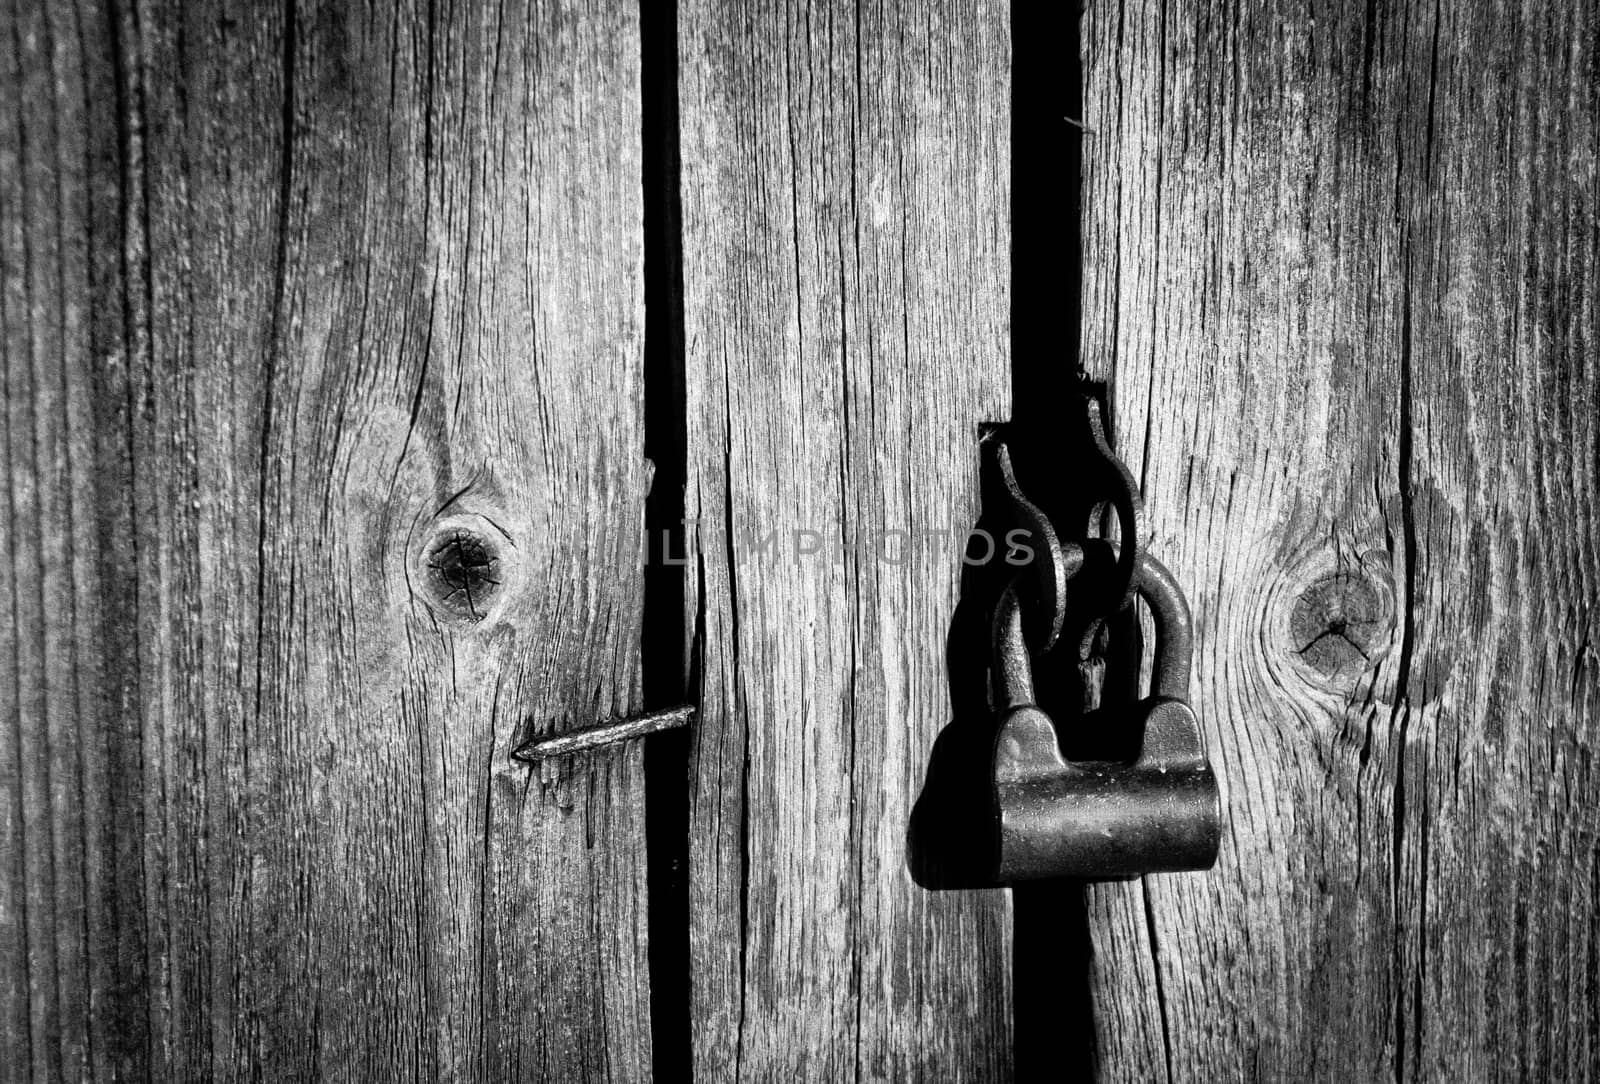 Old lock on the wooden door by leorantala